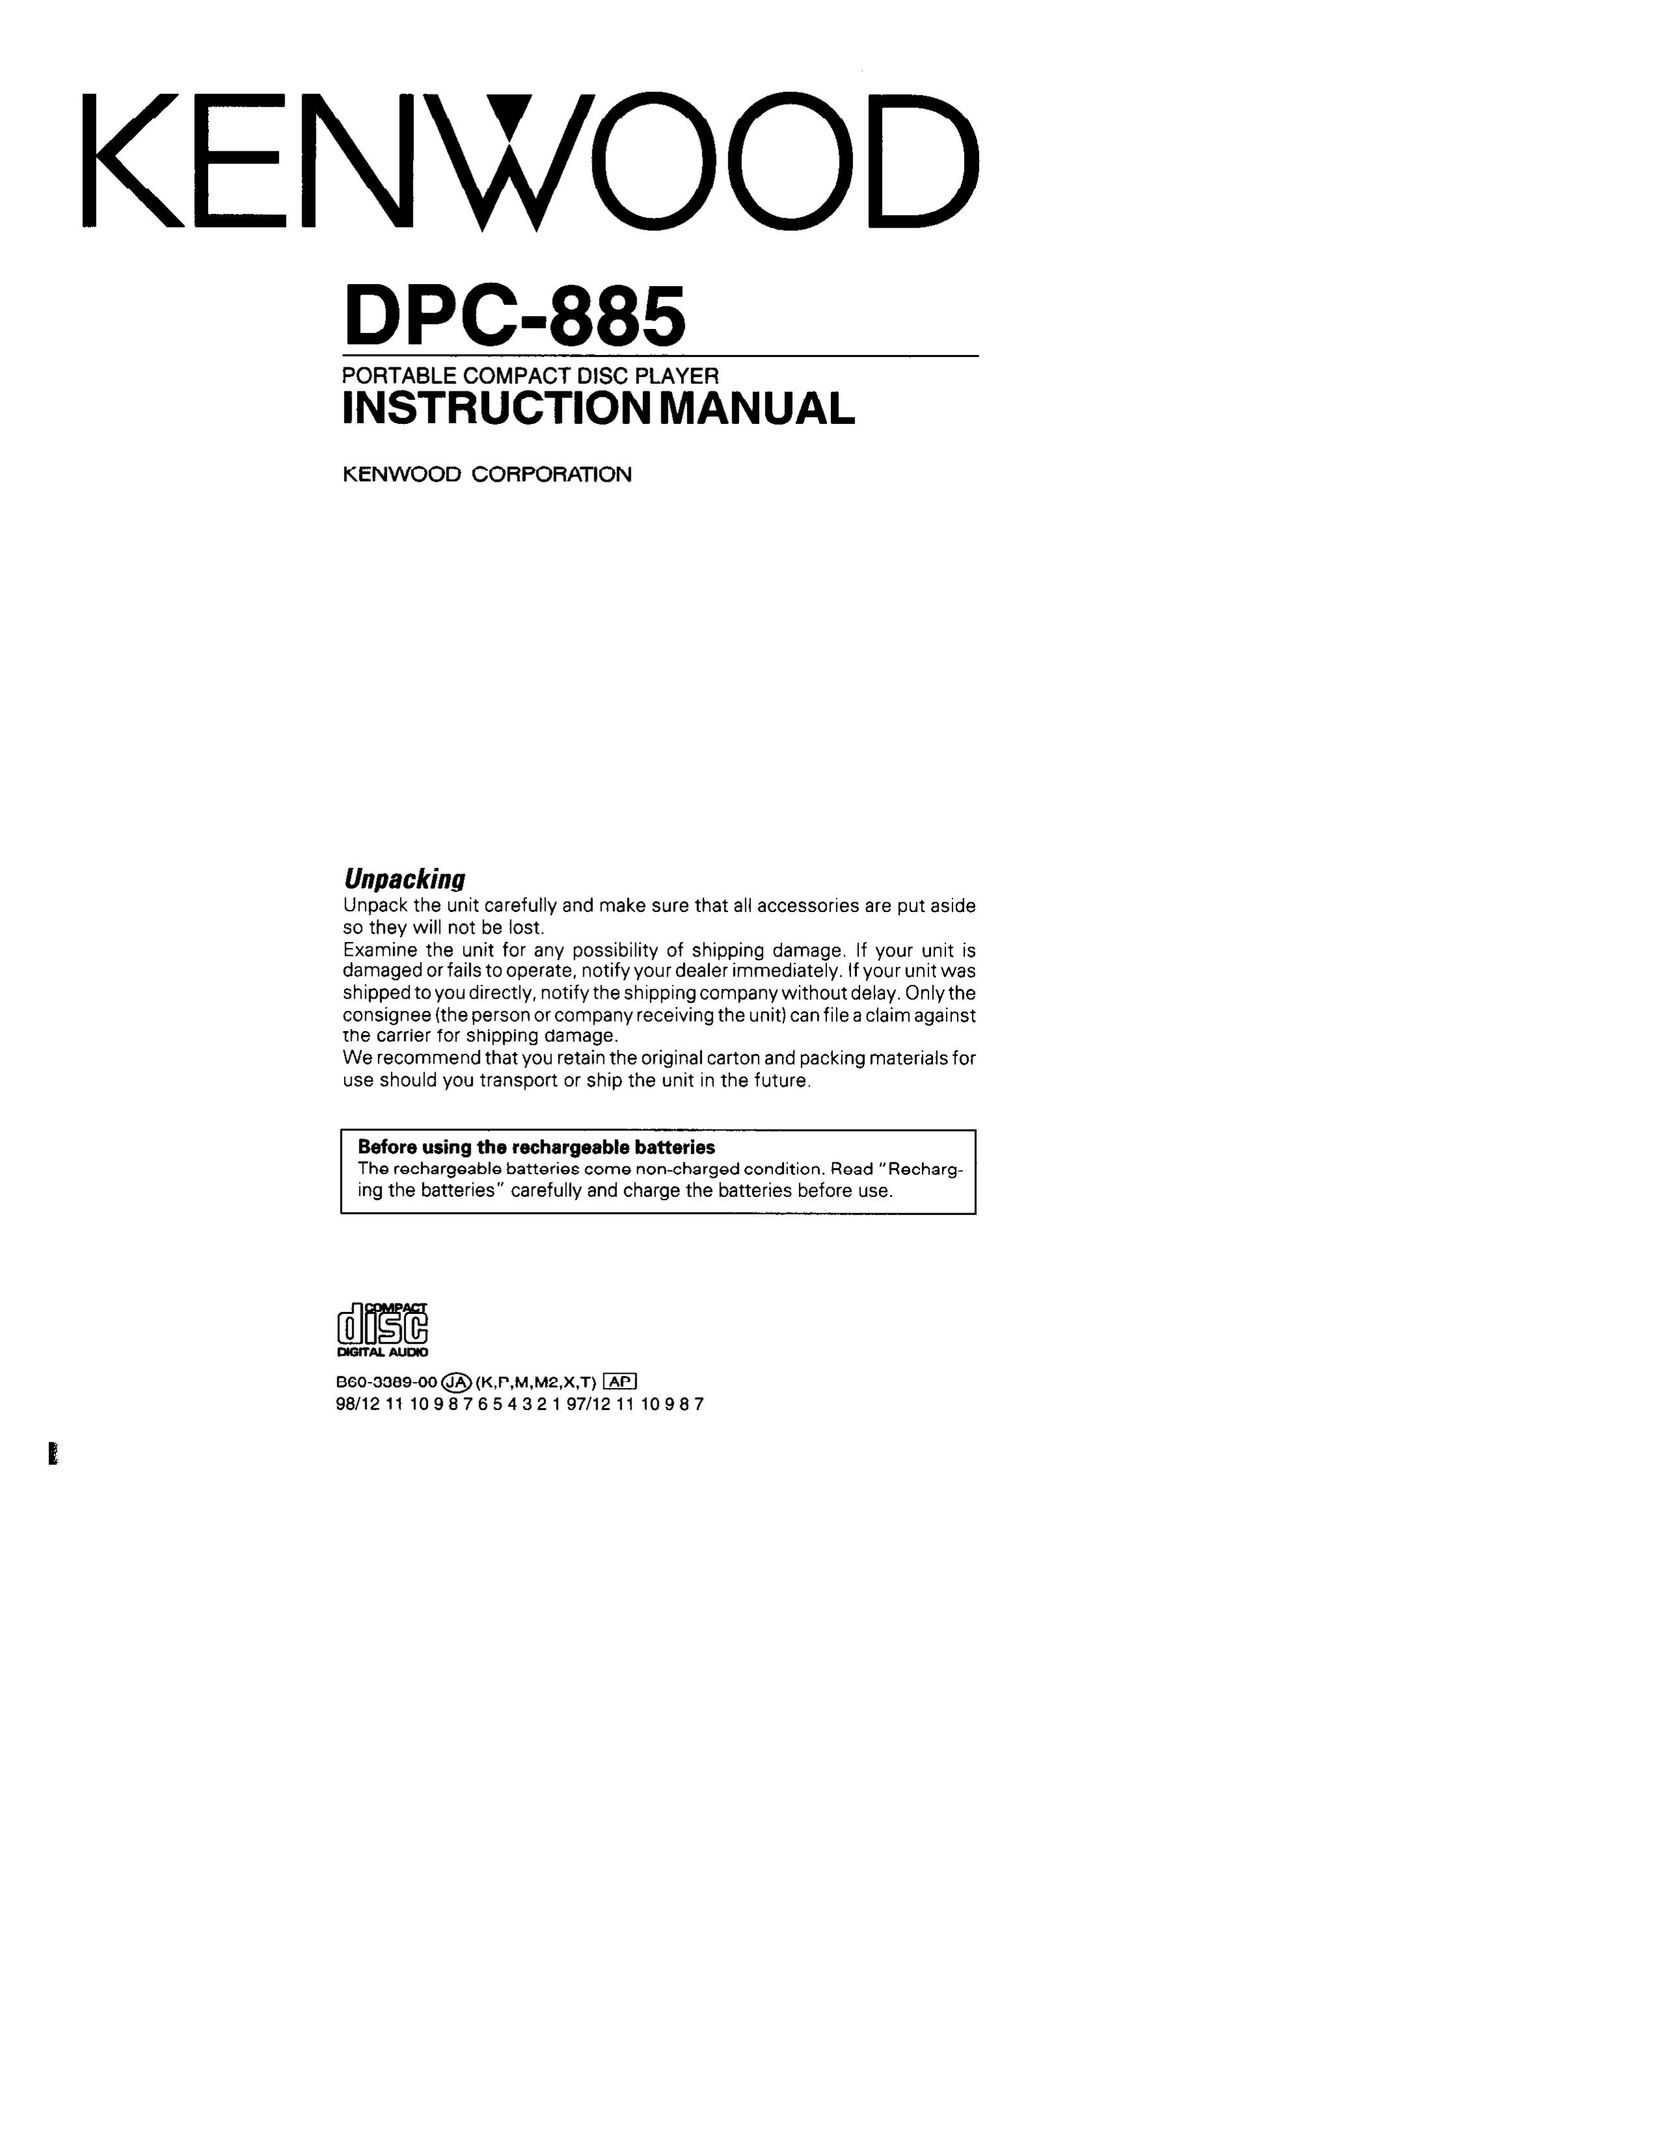 Kenwood DPC-885 CD Player User Manual